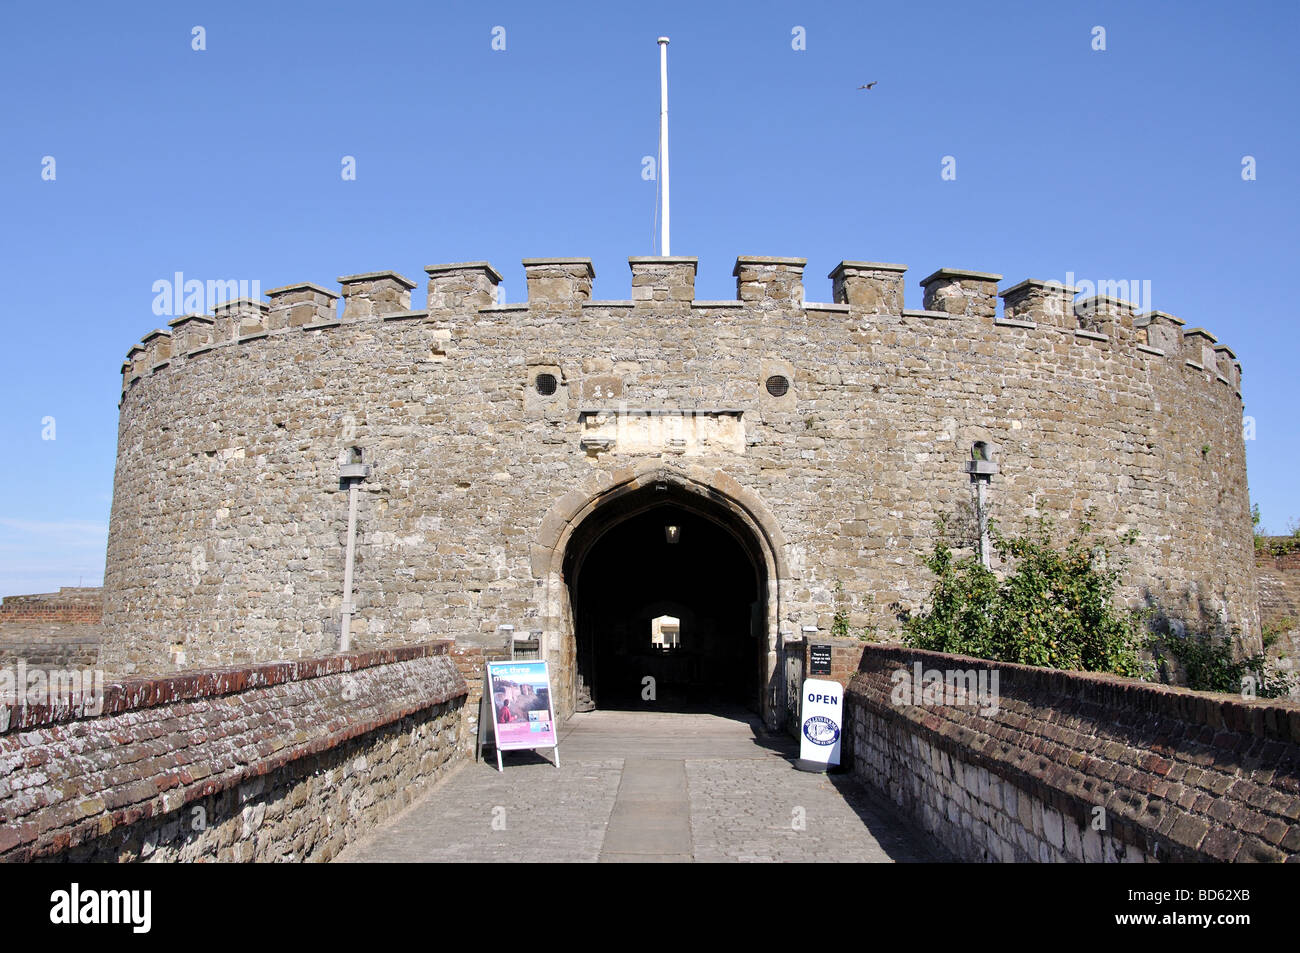 Entrance to Deal Castle, Deal, Kent, England, United Kingdom Stock Photo